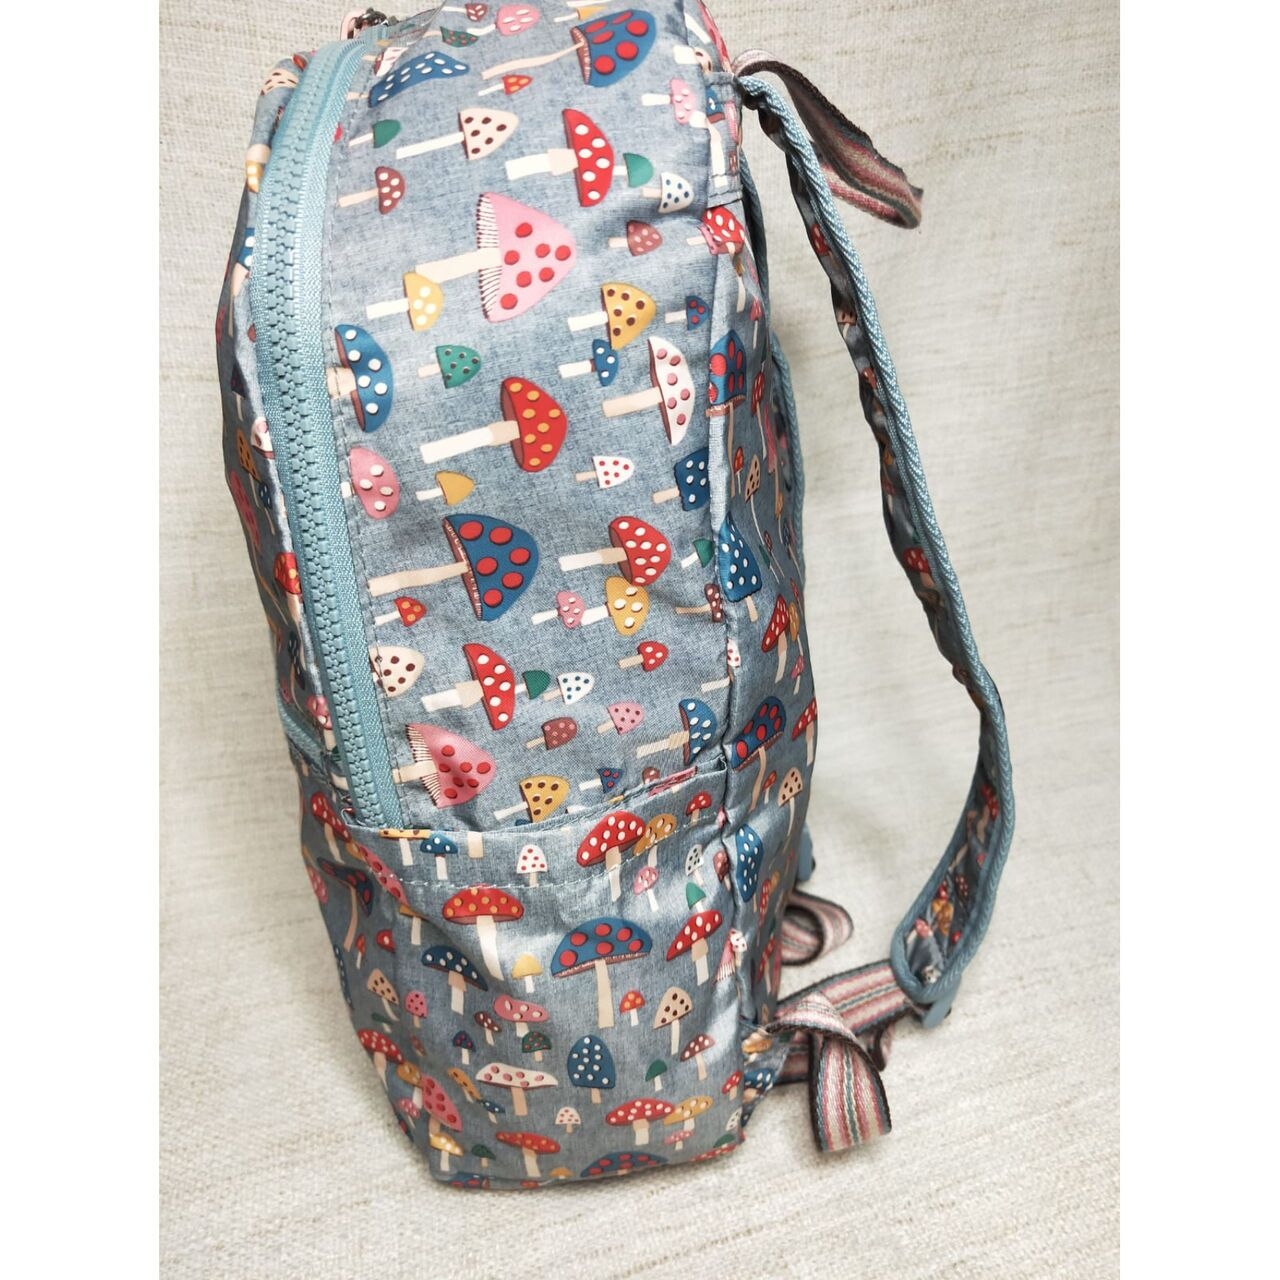 Cath Kidston Multi Backpack